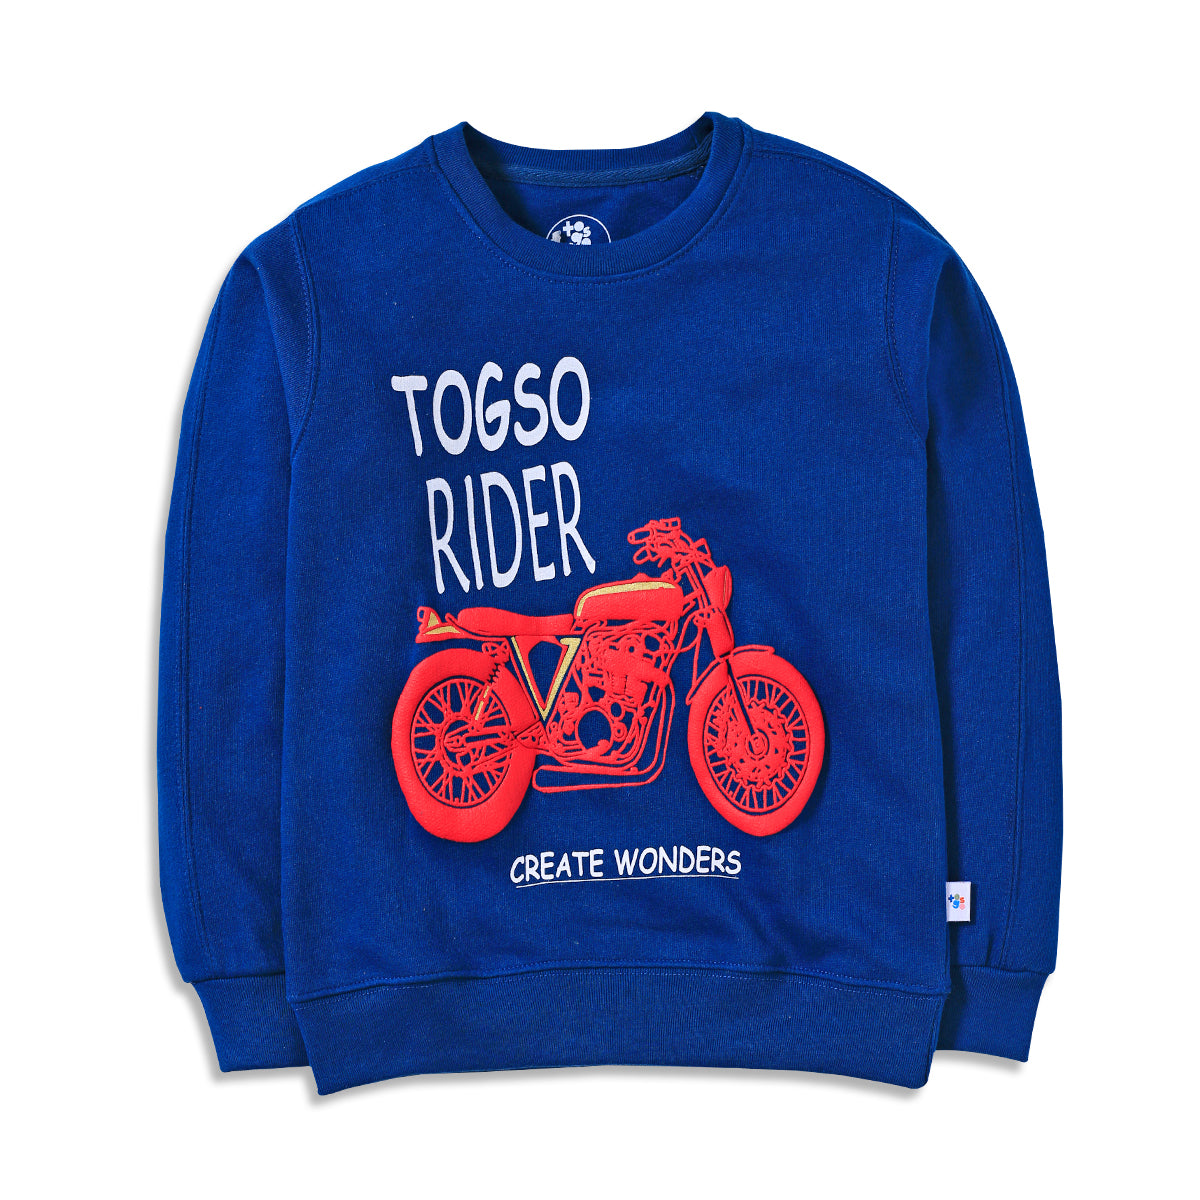 Togso Rider Sweatshirt